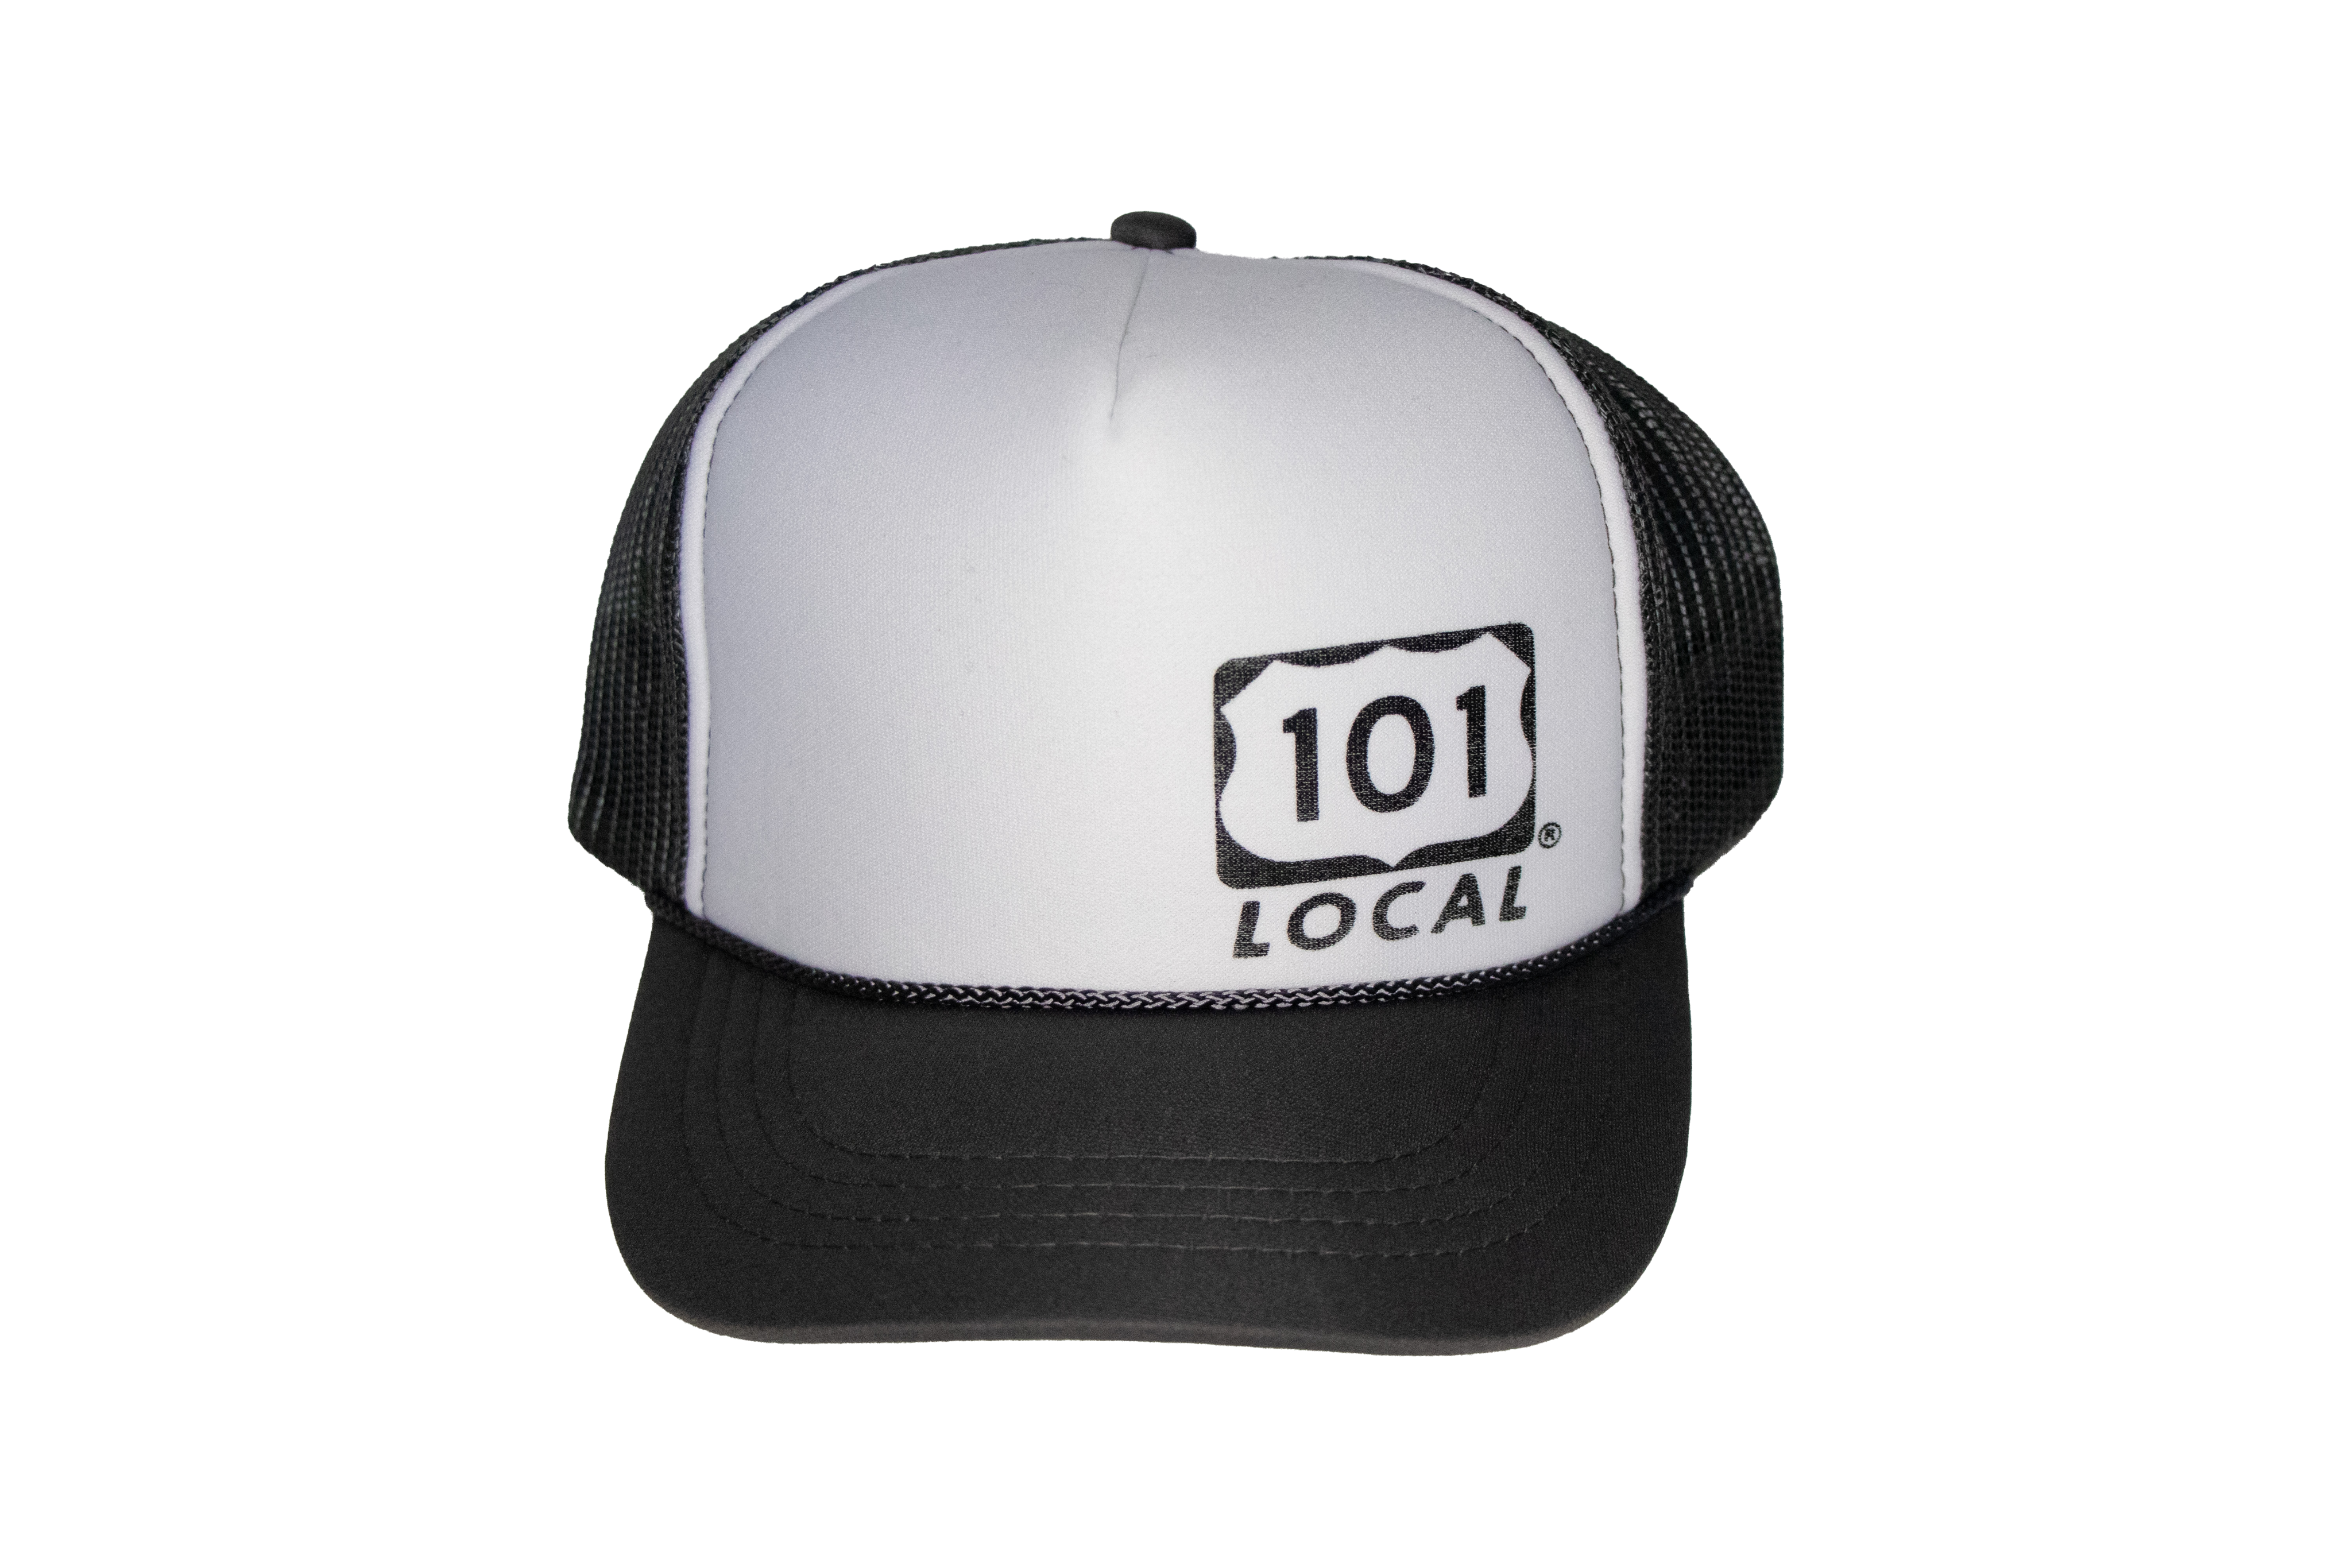 101 Local Low Profile Trucker Hat